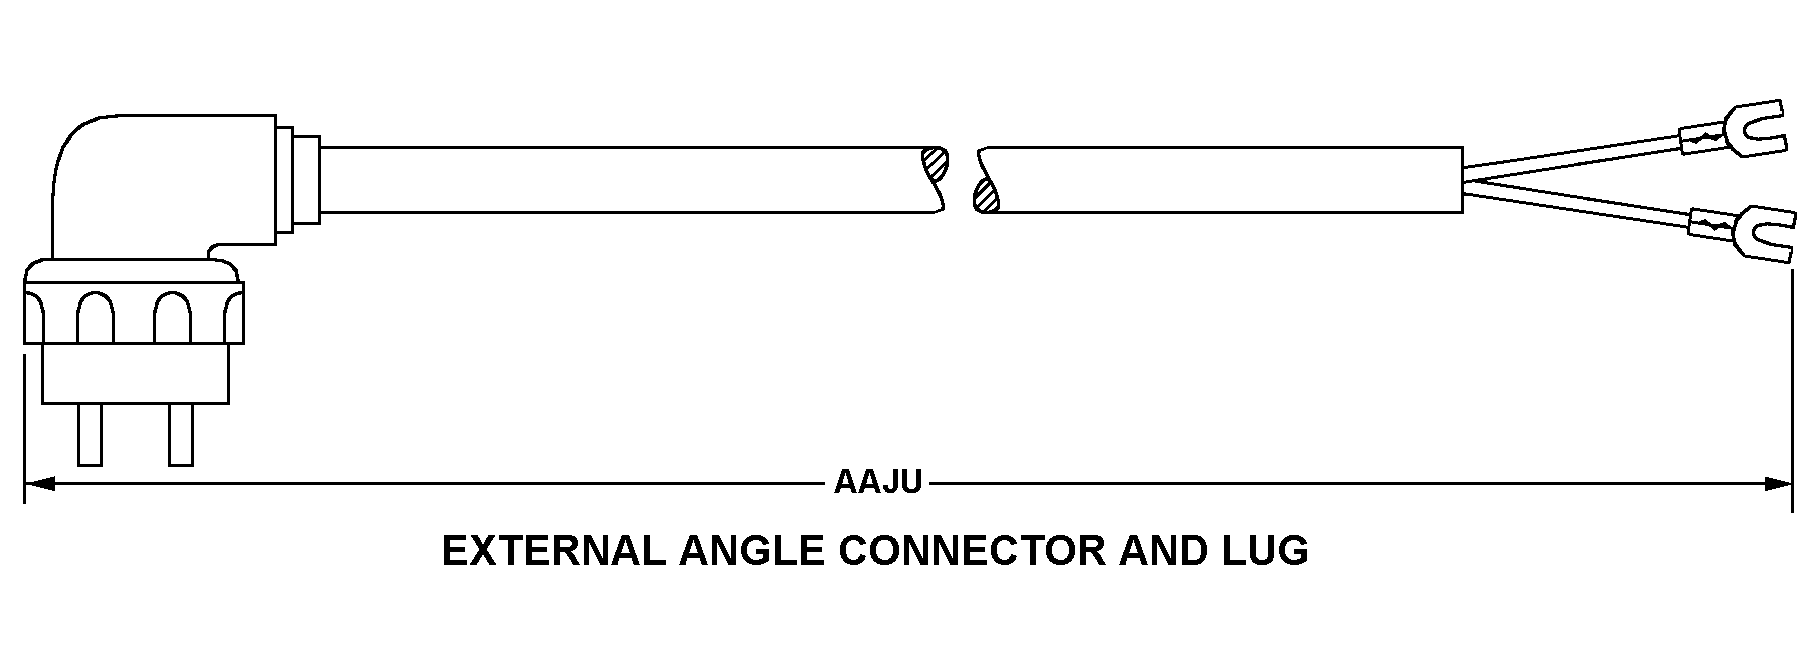 EXTERNAL ANGLE CONNECTOR AND LUG style nsn 6150-01-424-3940